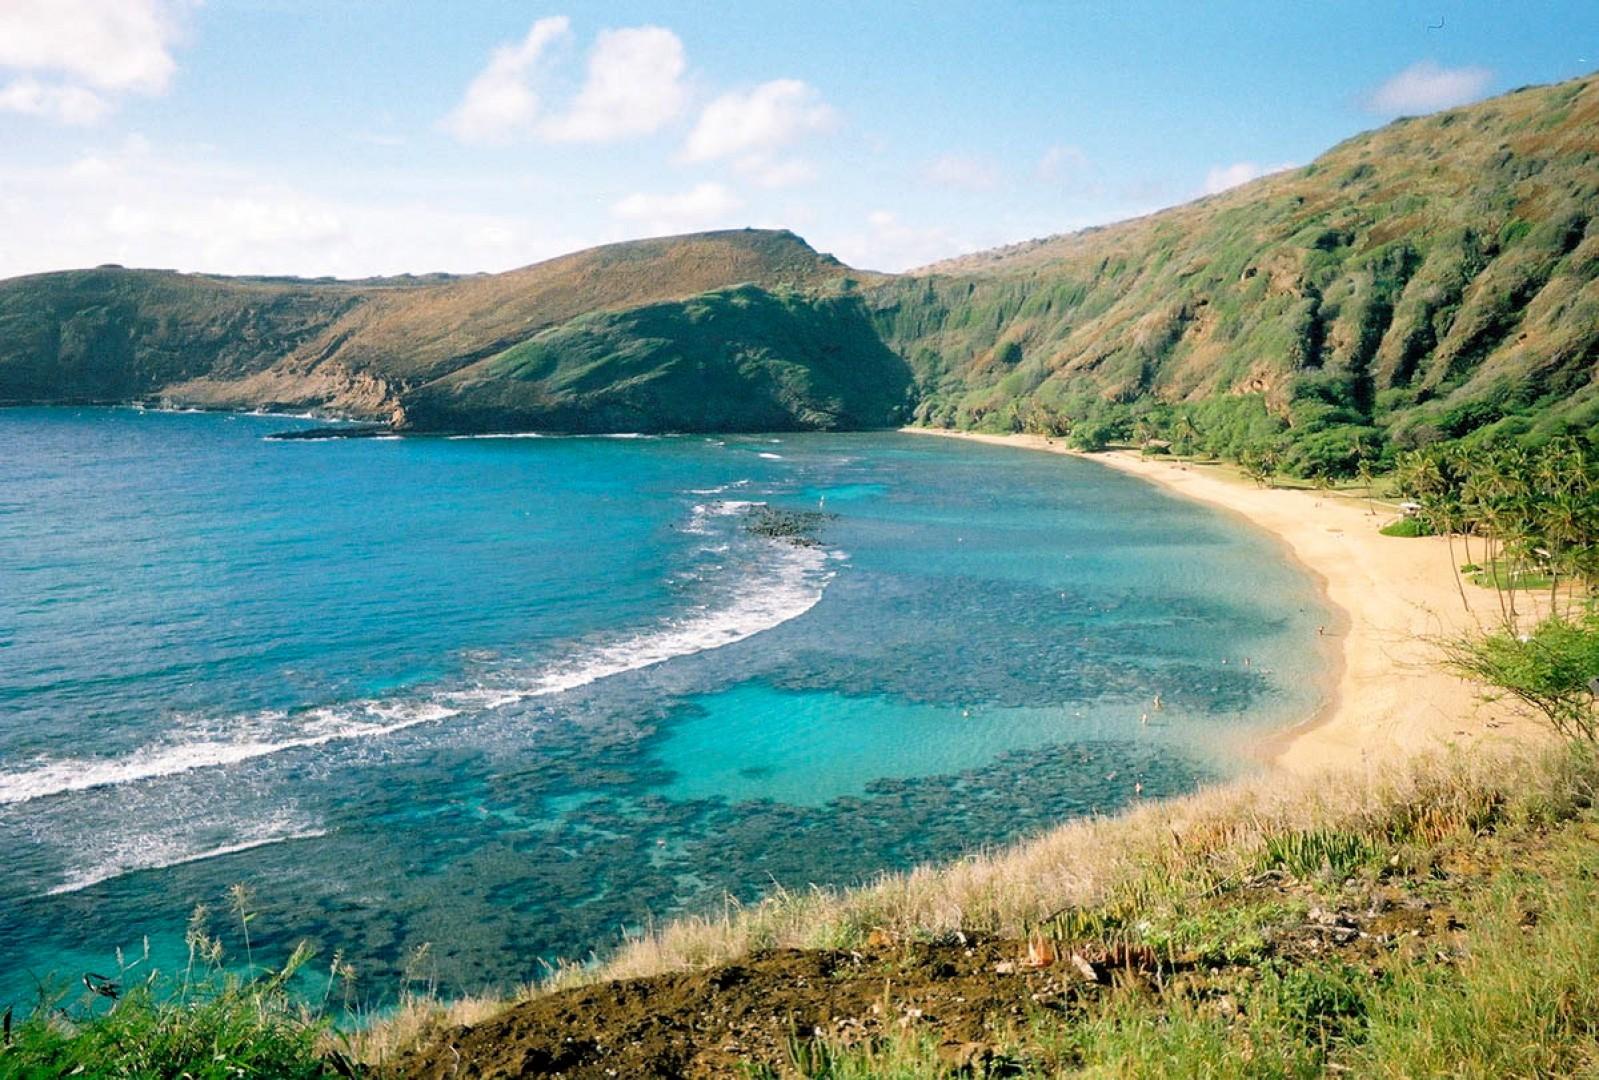 Honolulu Vacation Rentals, Ohana Kai - Beaches like world-famous Hanauma Bay are only a short drive away!